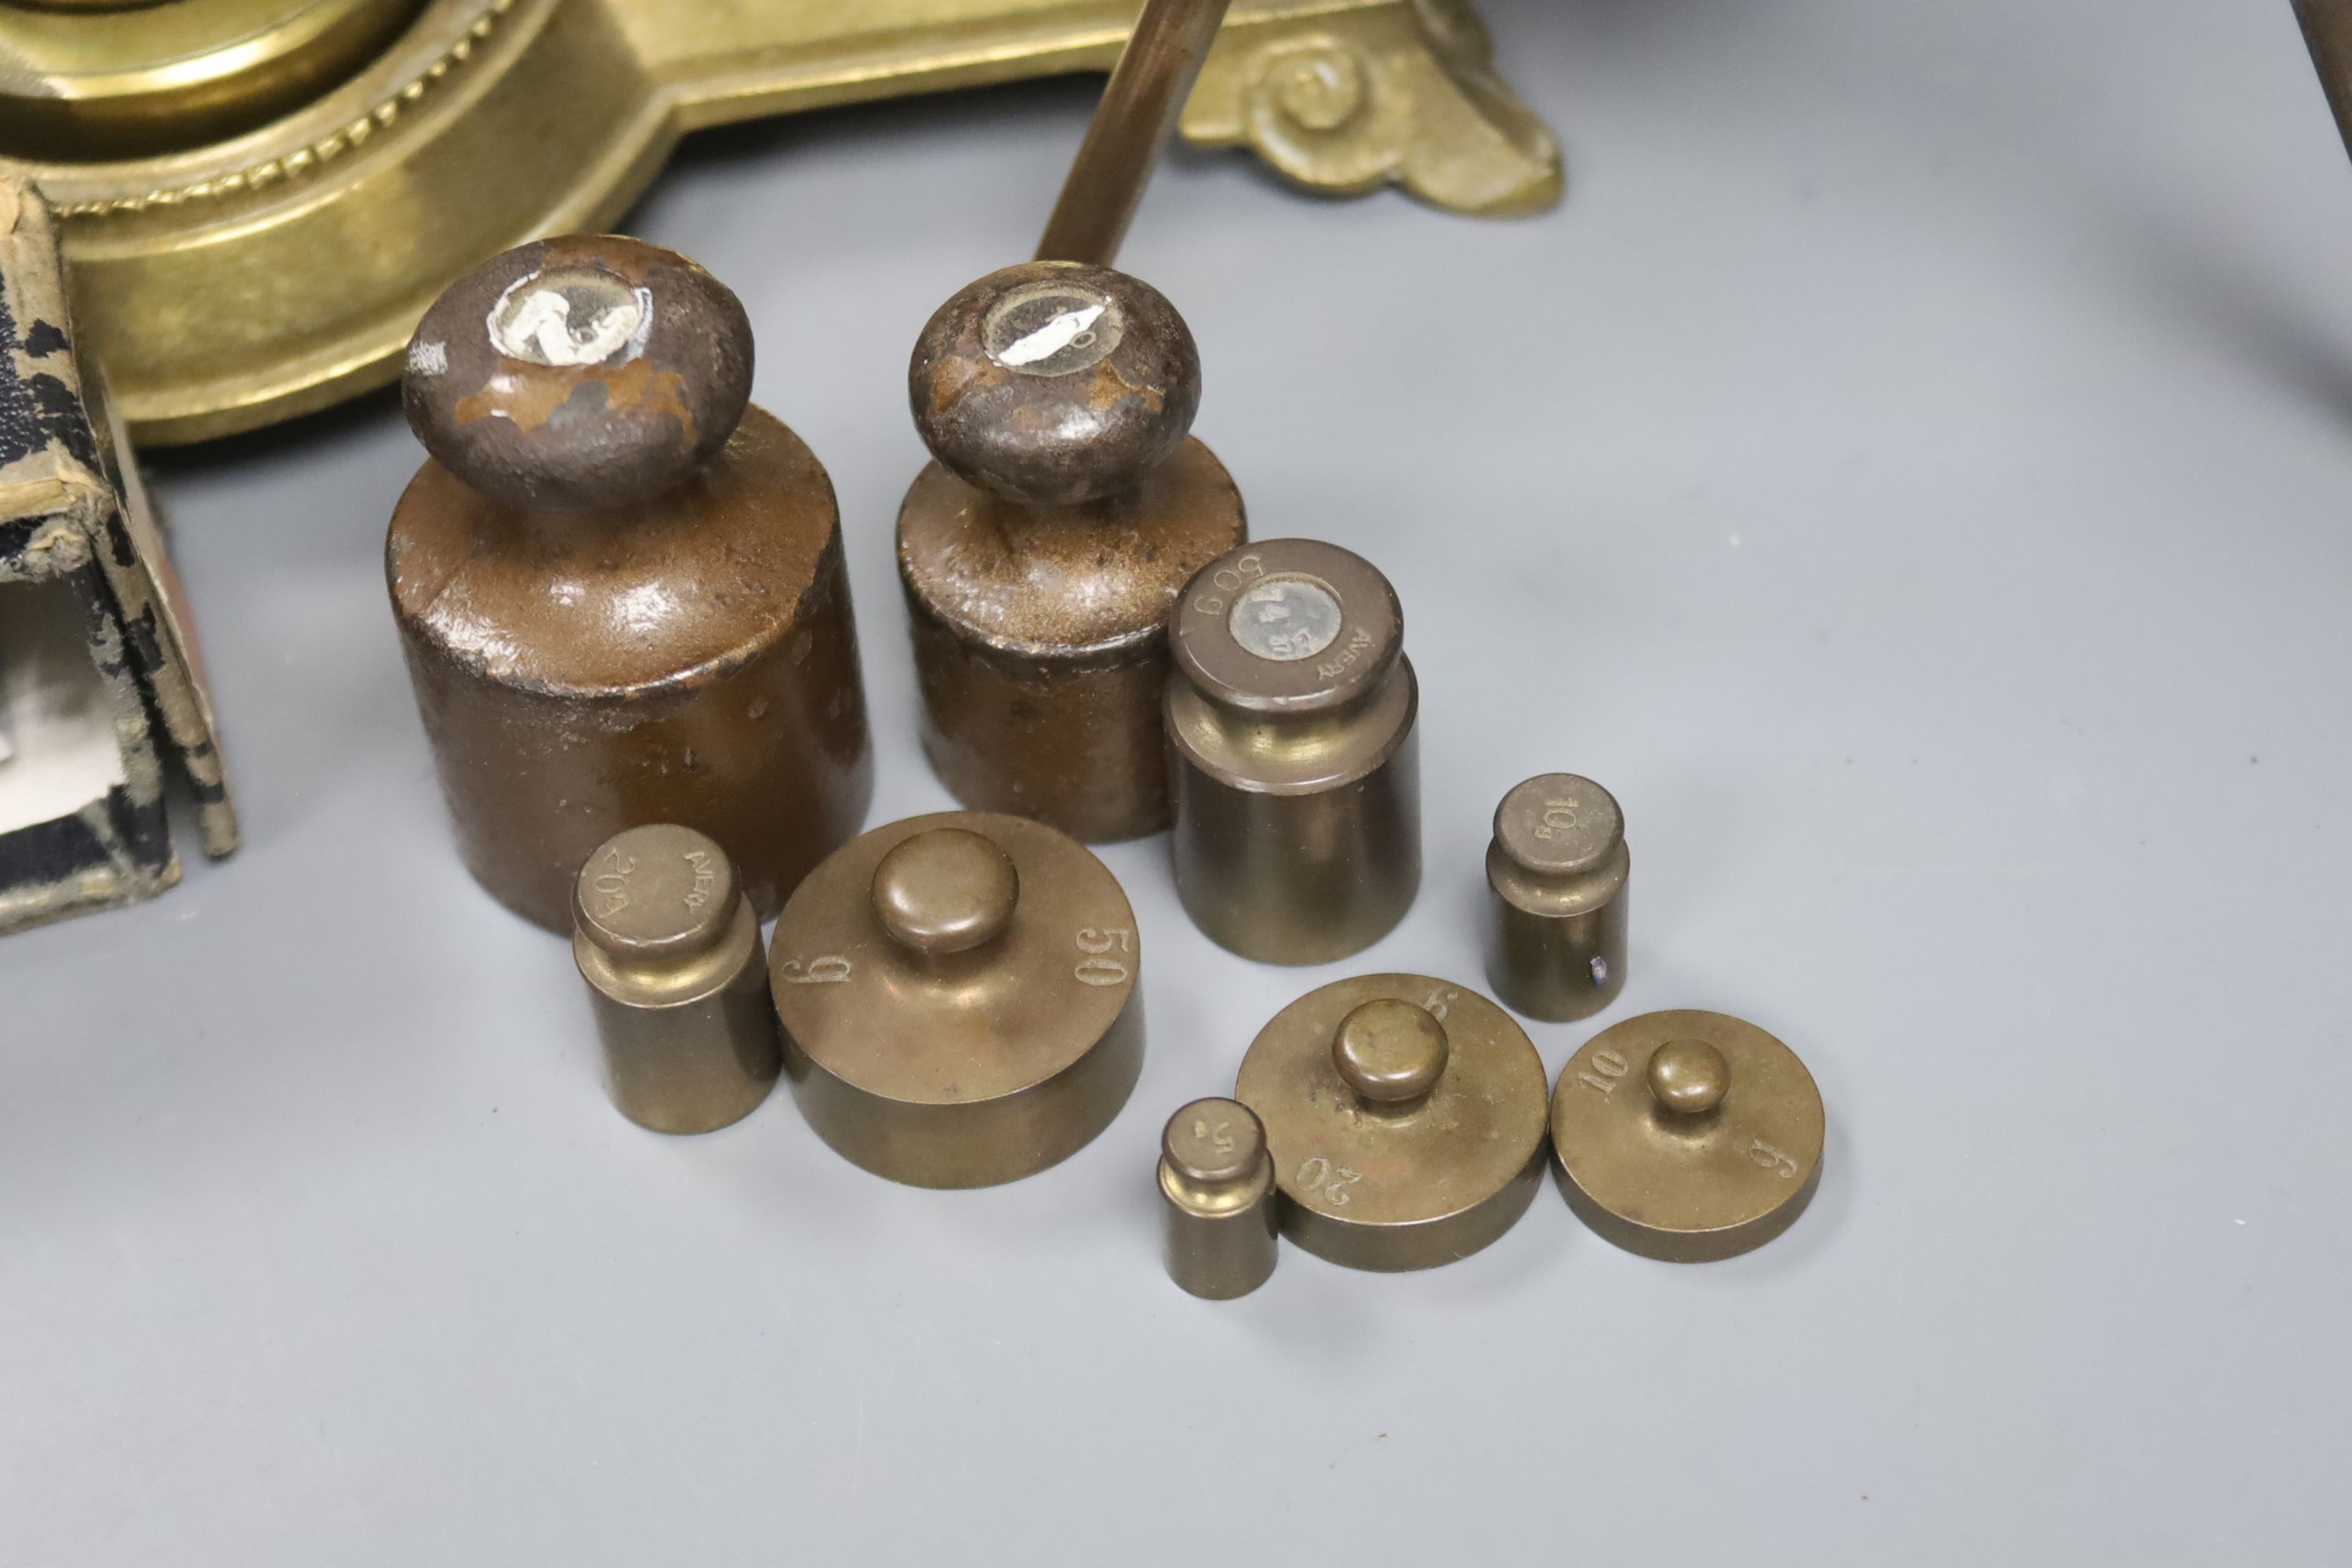 An Otis King's pocket calculator, a Voigtlander scope and brass postal scales